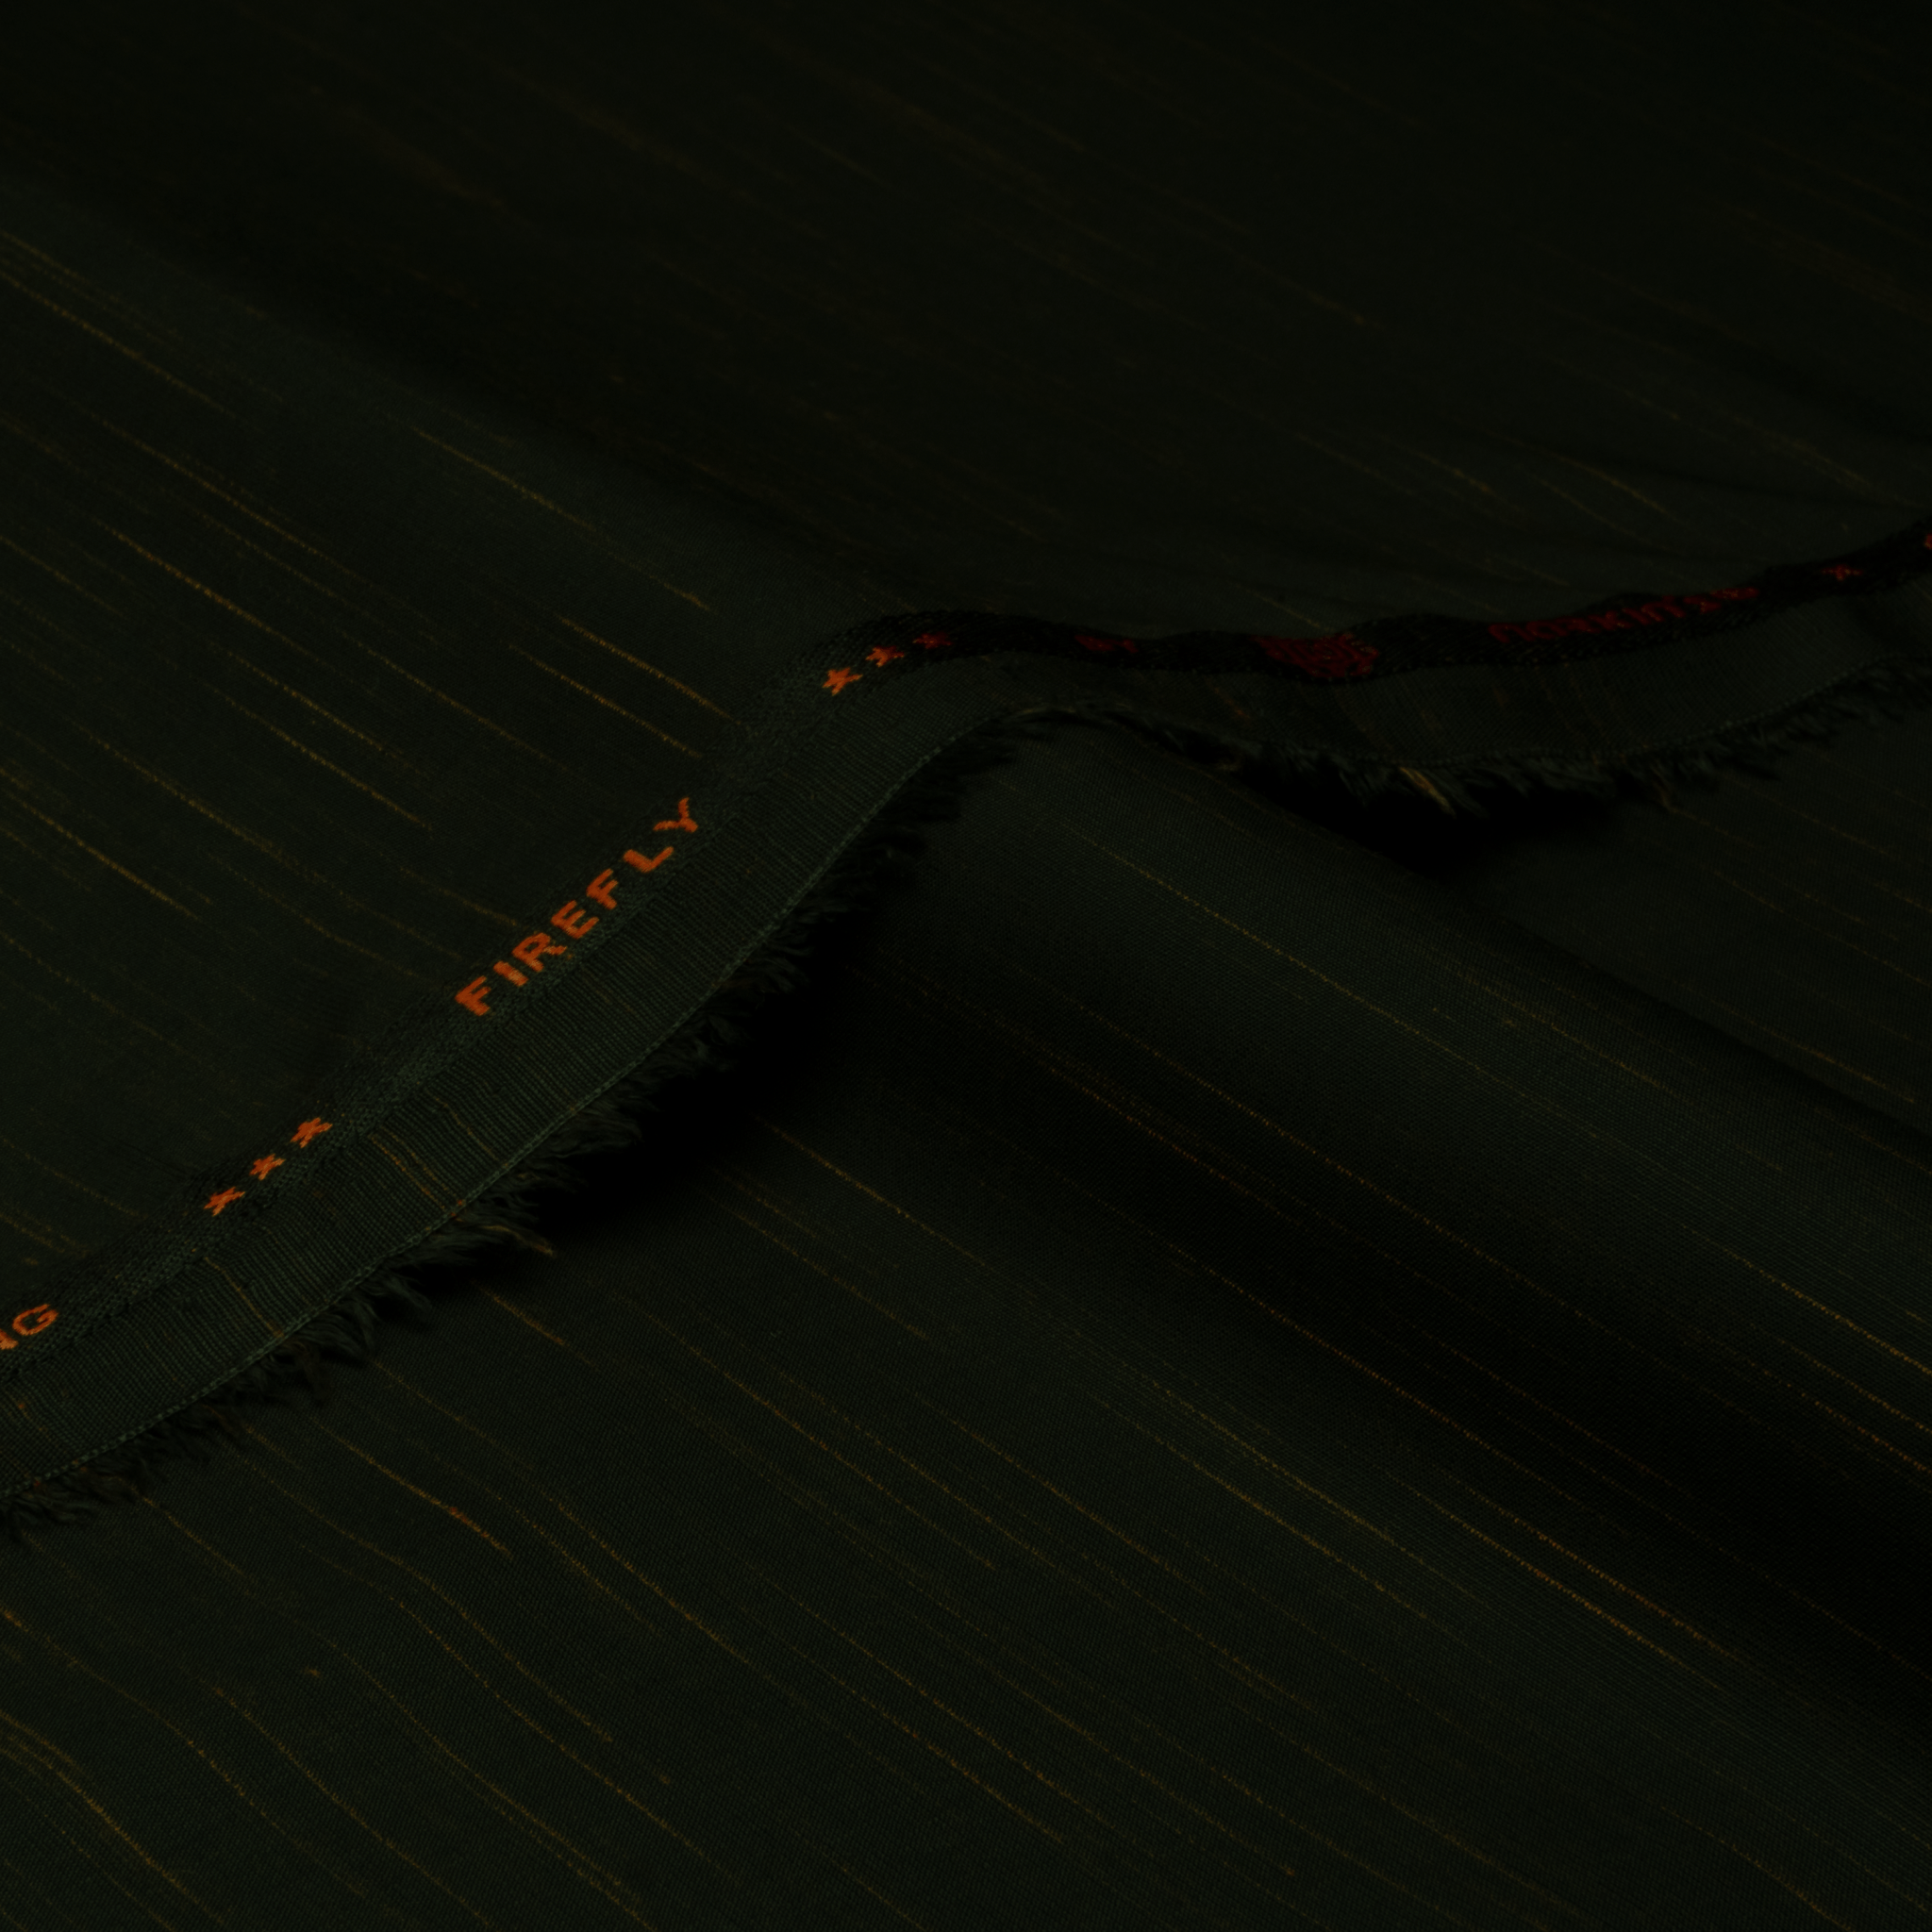 Firefly - Summer Blended (4.5 Mtr) - Narkin's Textile Industries